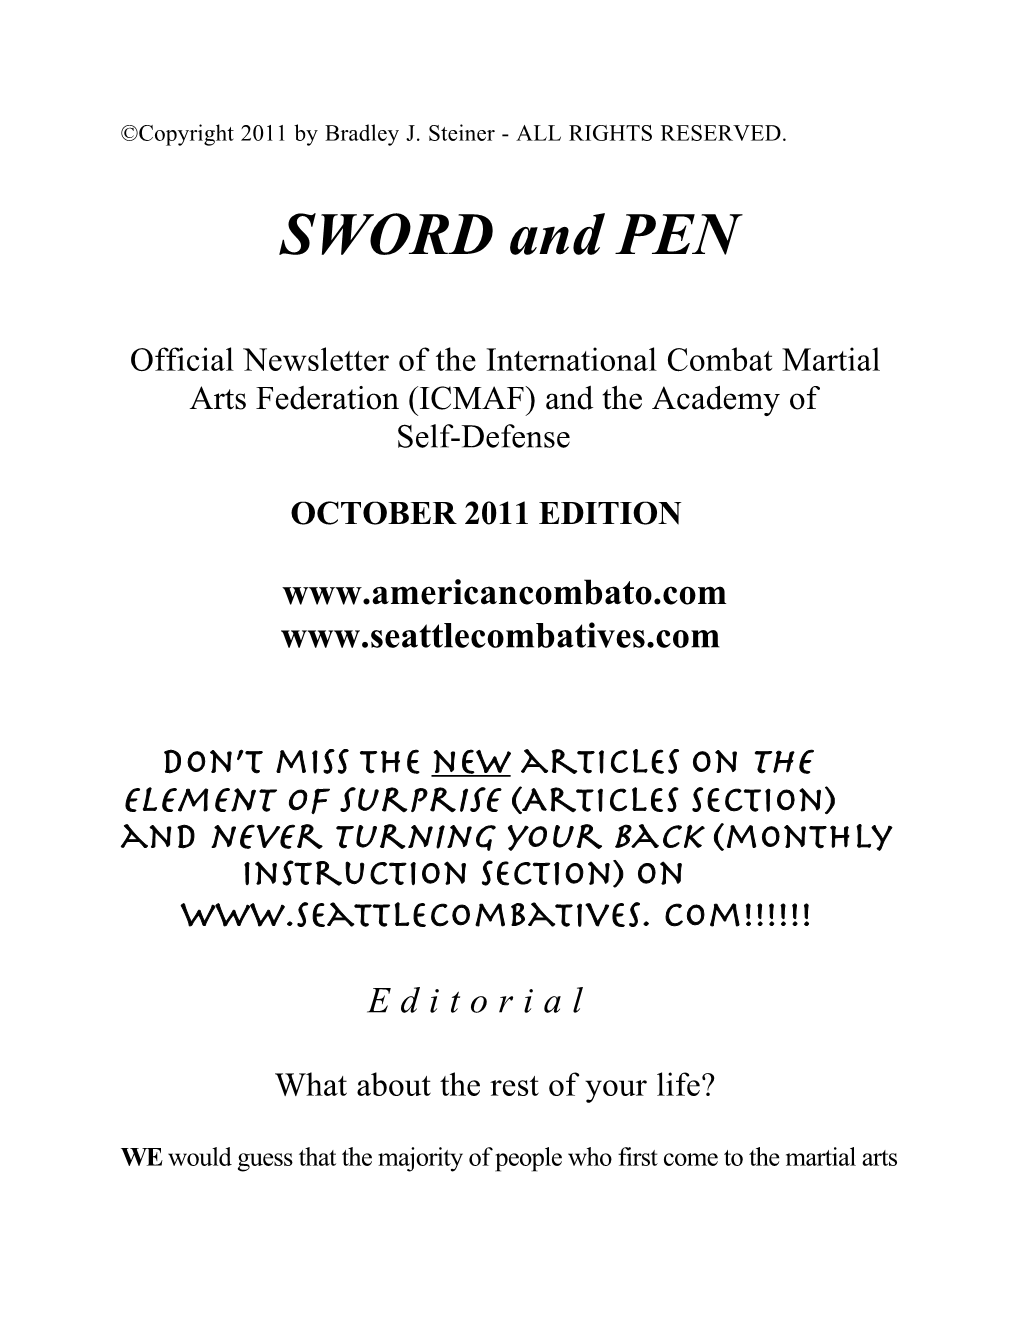 OCTOBER 2011 SWORD & PEN.Cwk